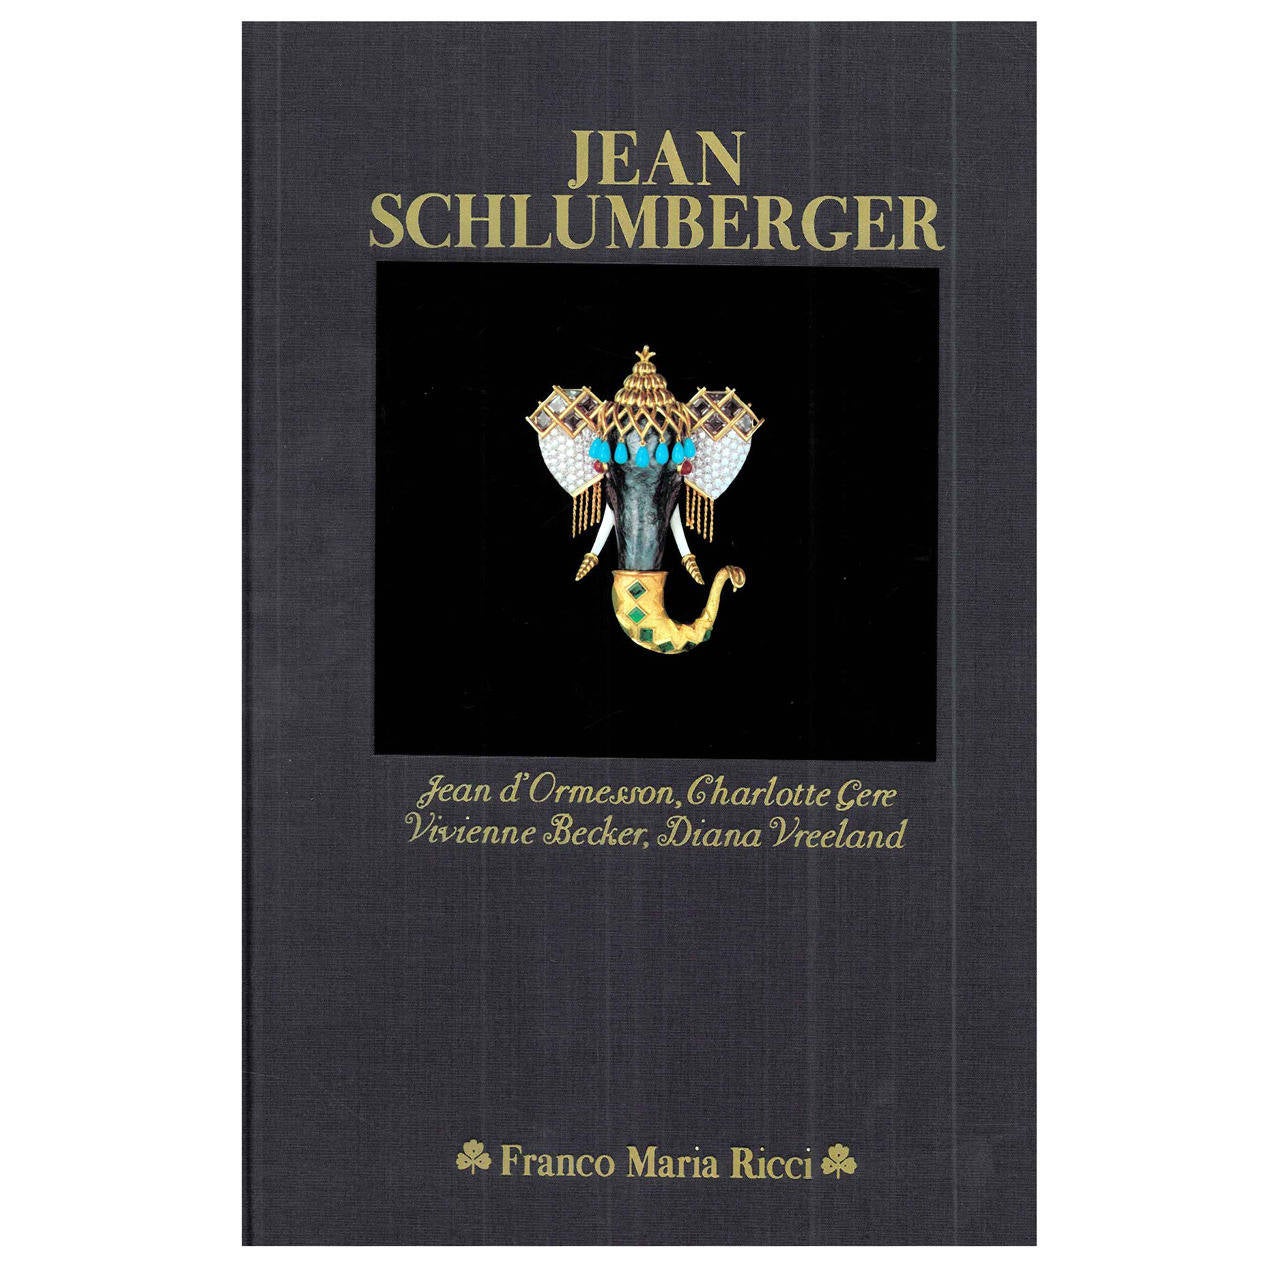 Book of JEAN SCHLUMBERGER, Jewelry